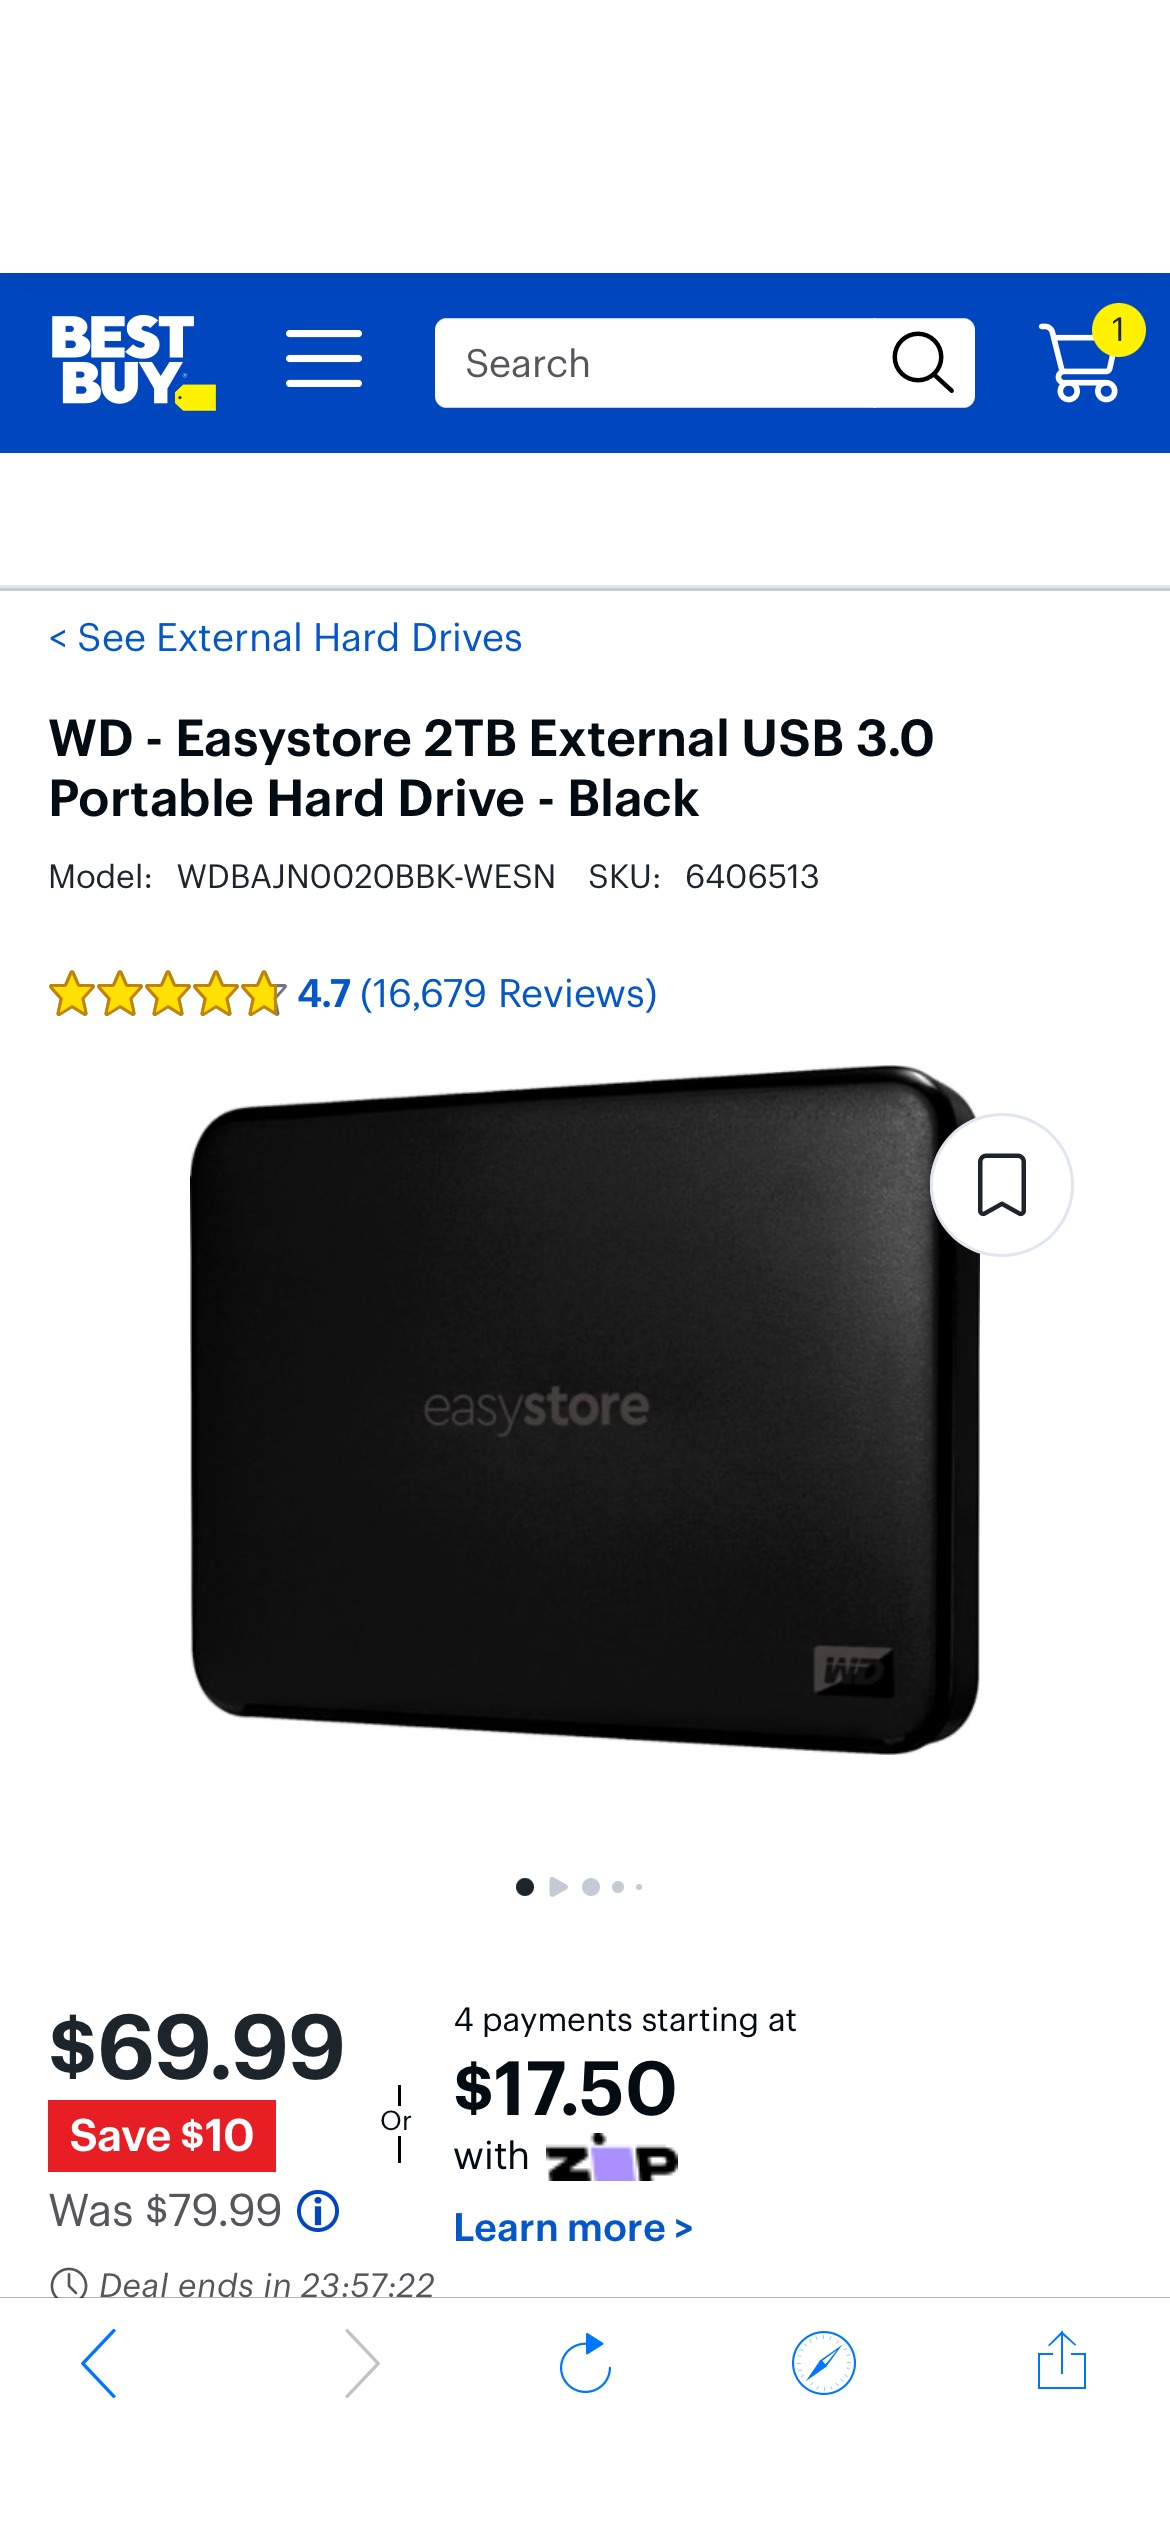 WD Easystore 2TB External USB 3.0 Portable Hard Drive Black WDBAJN0020BBK-WESN - Best Buy